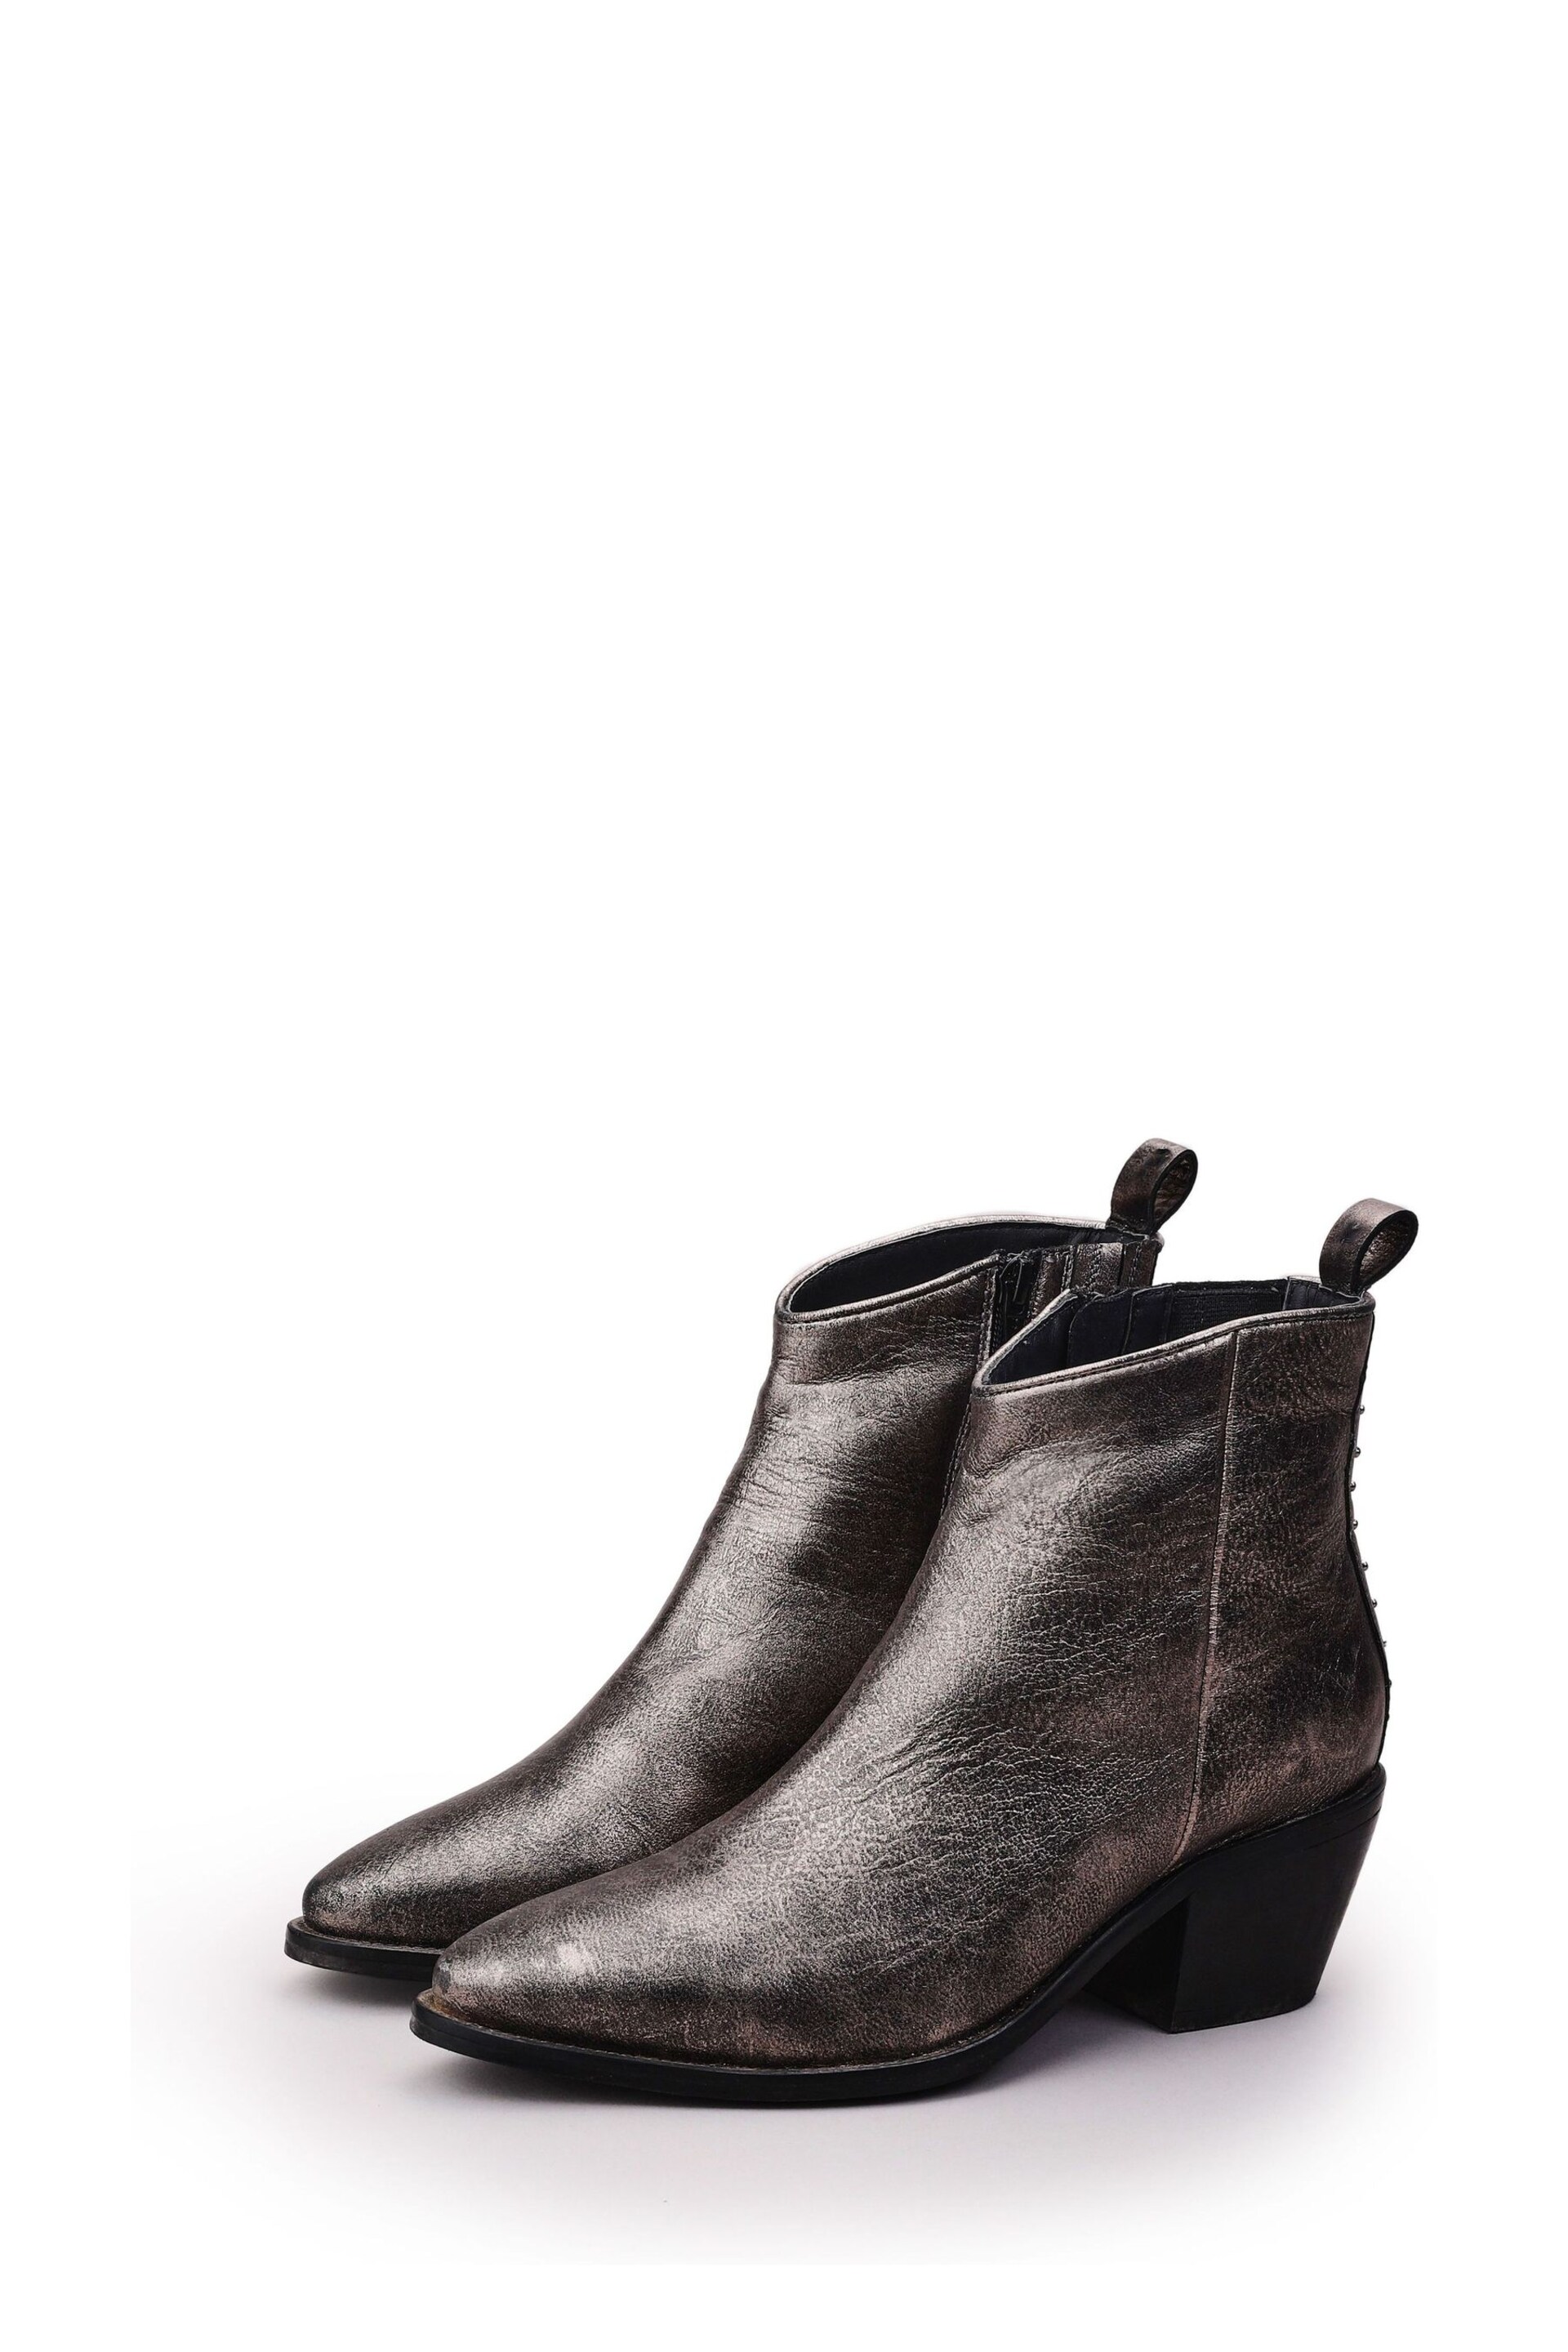 Moda In Pelle Metallic Western Boots - Image 3 of 5